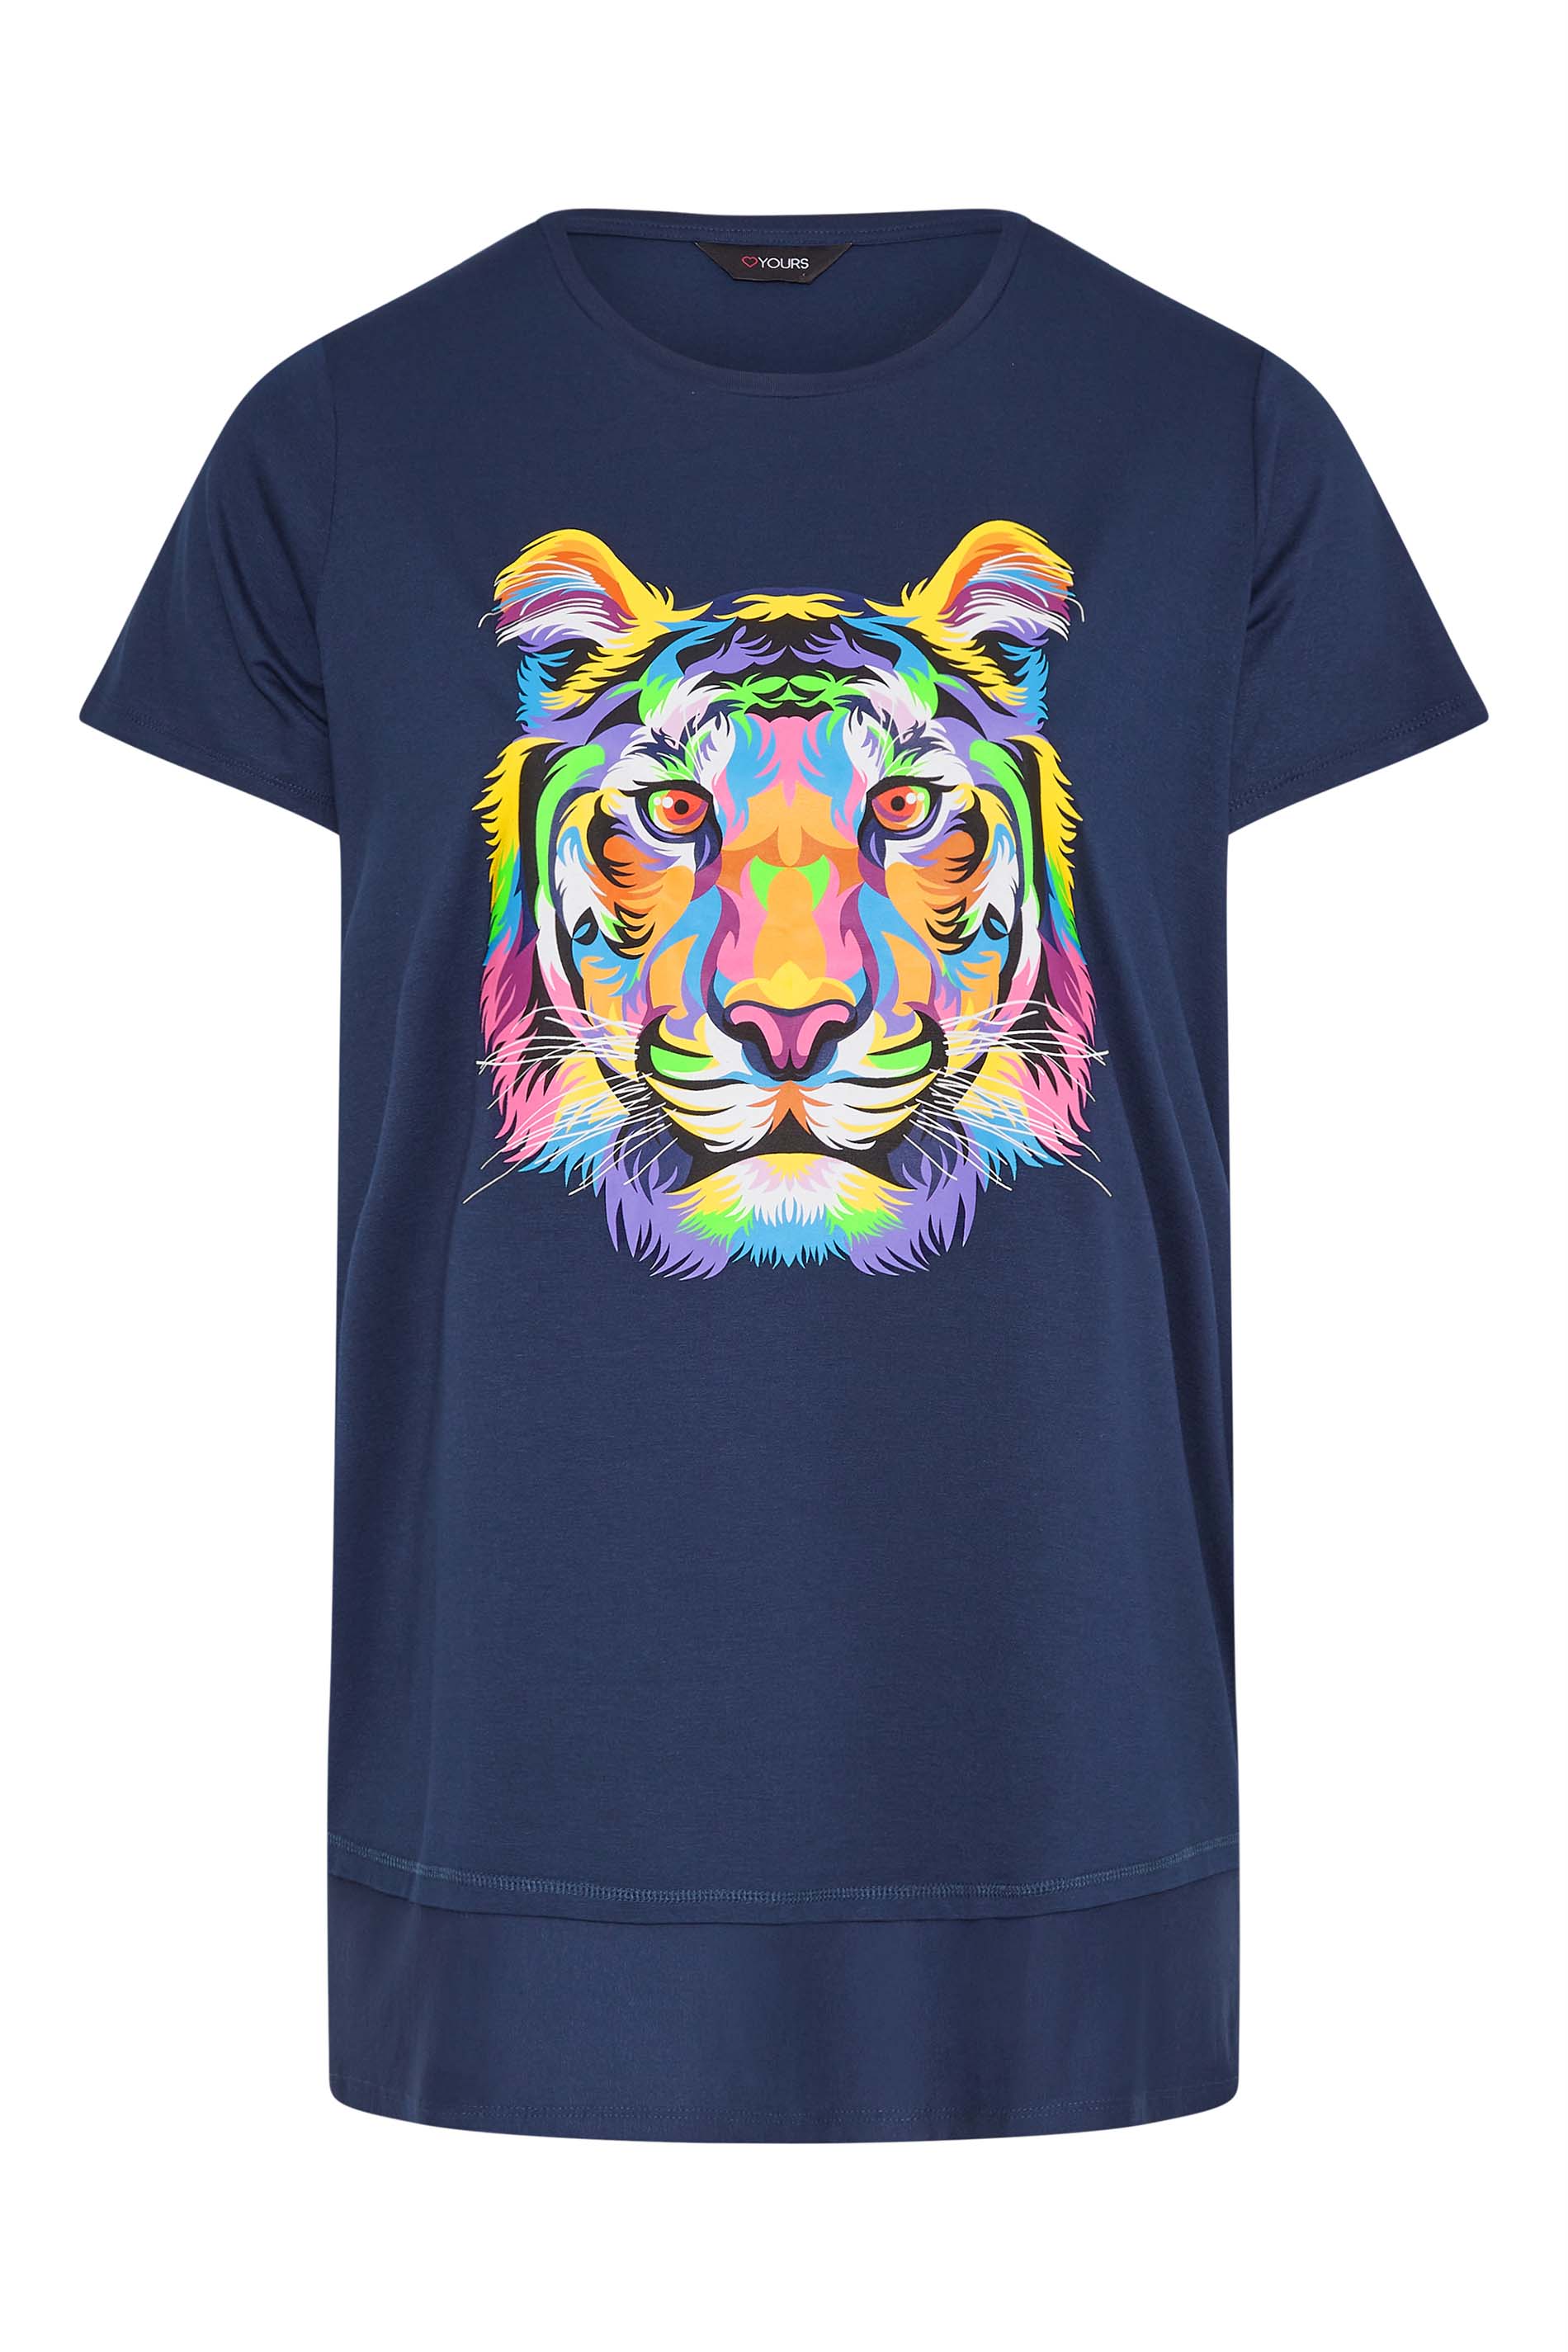 Grande taille  Tops Grande taille  T-Shirts | T-Shirt Bleu Marine en Jersey Graphique Tigre - UQ66952